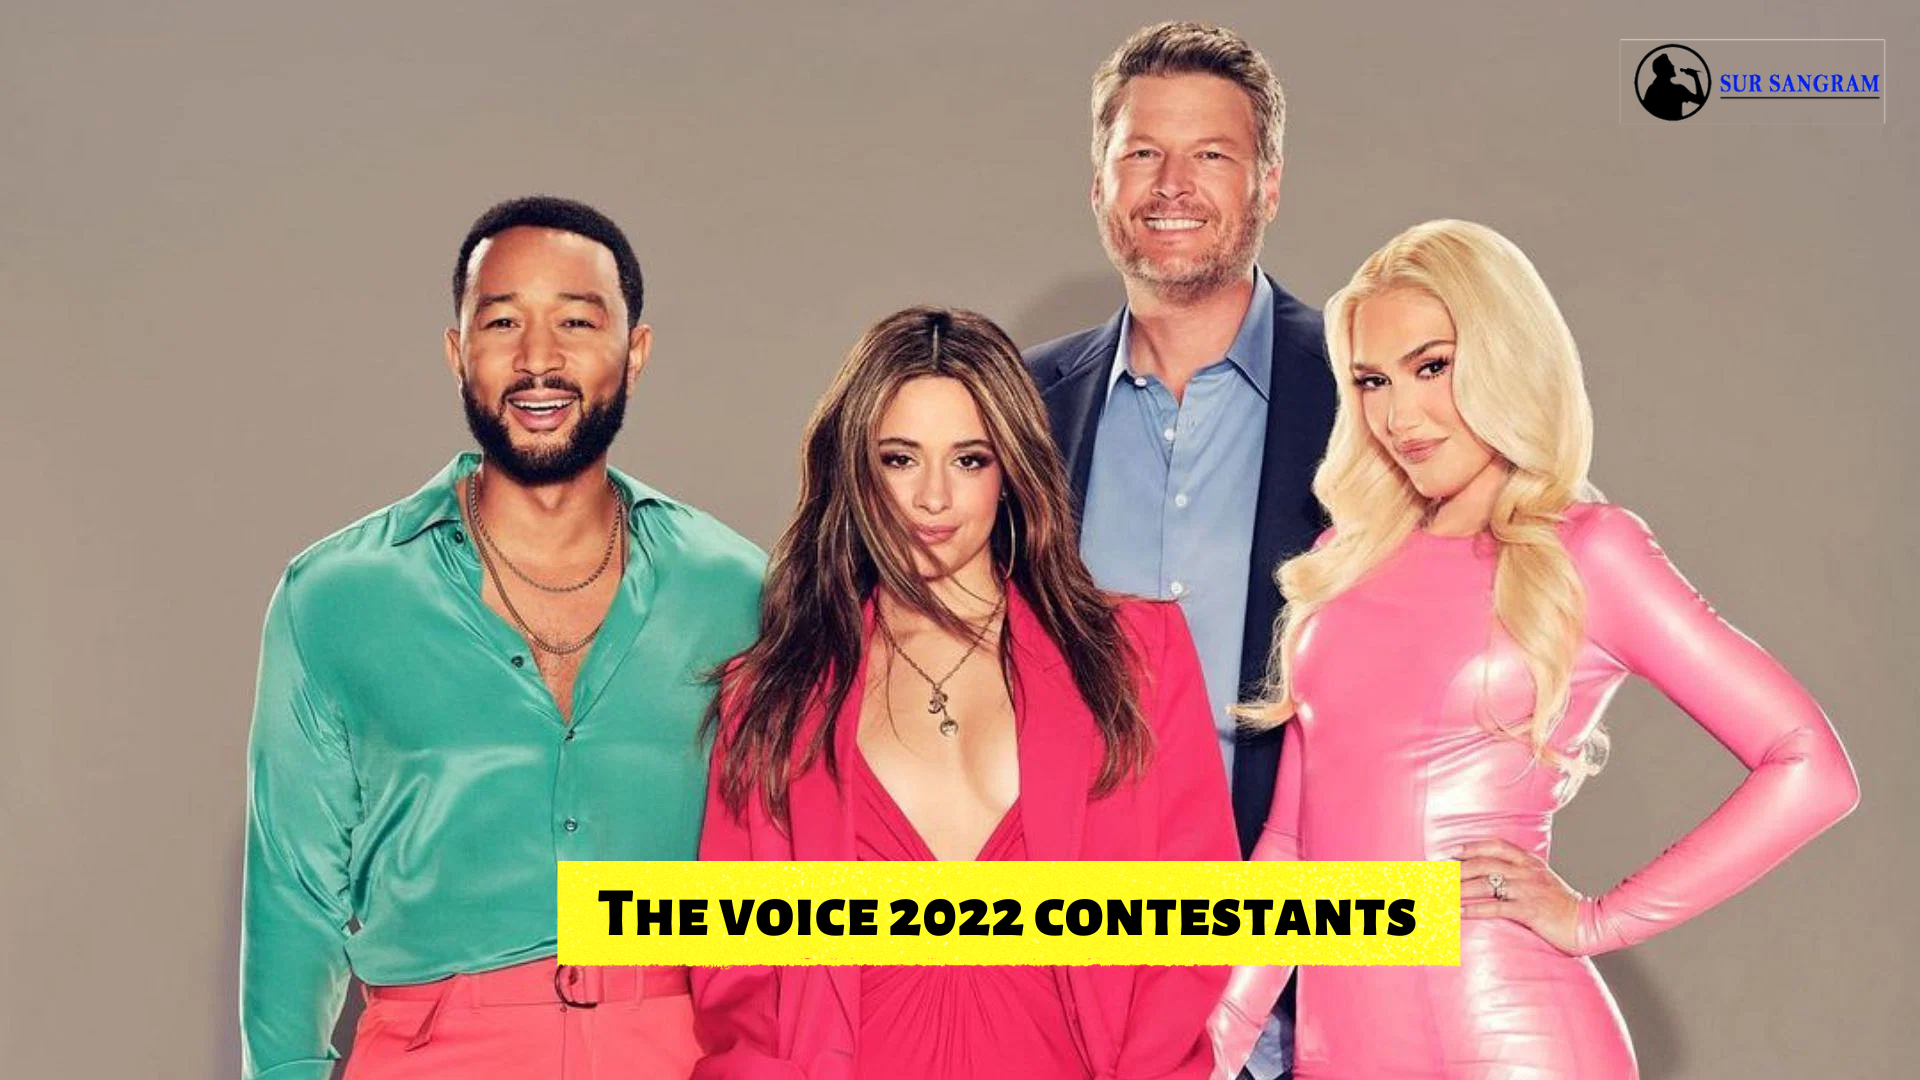 The Voice 2022 Contestants